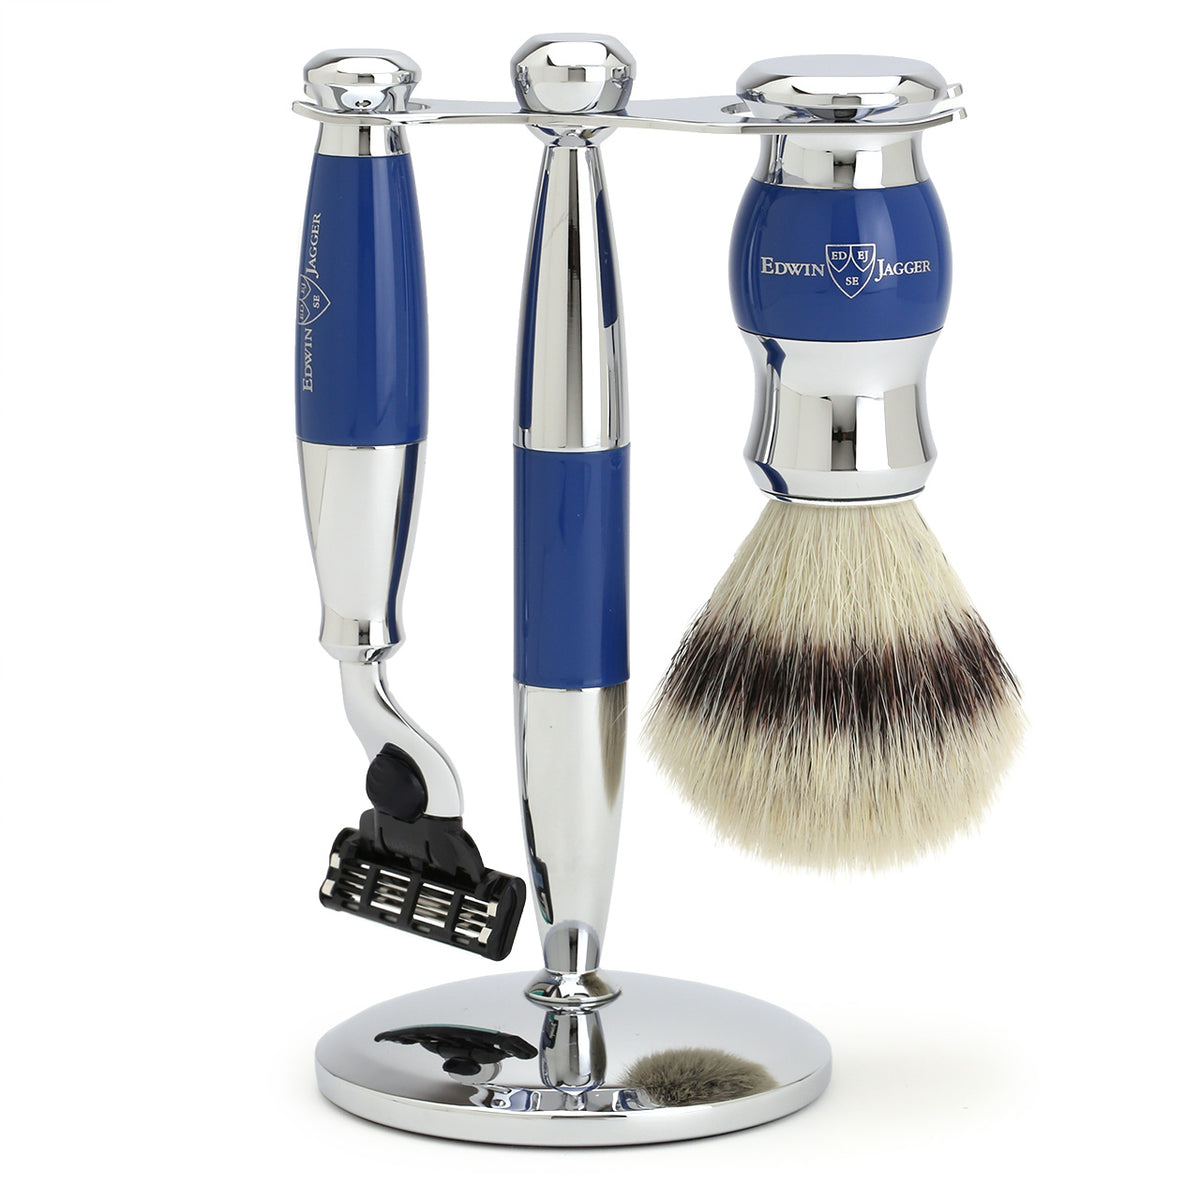 Edwin Jagger Shaving Set with Mach3 Razor, Shaving Brush &amp; Stand - Blue